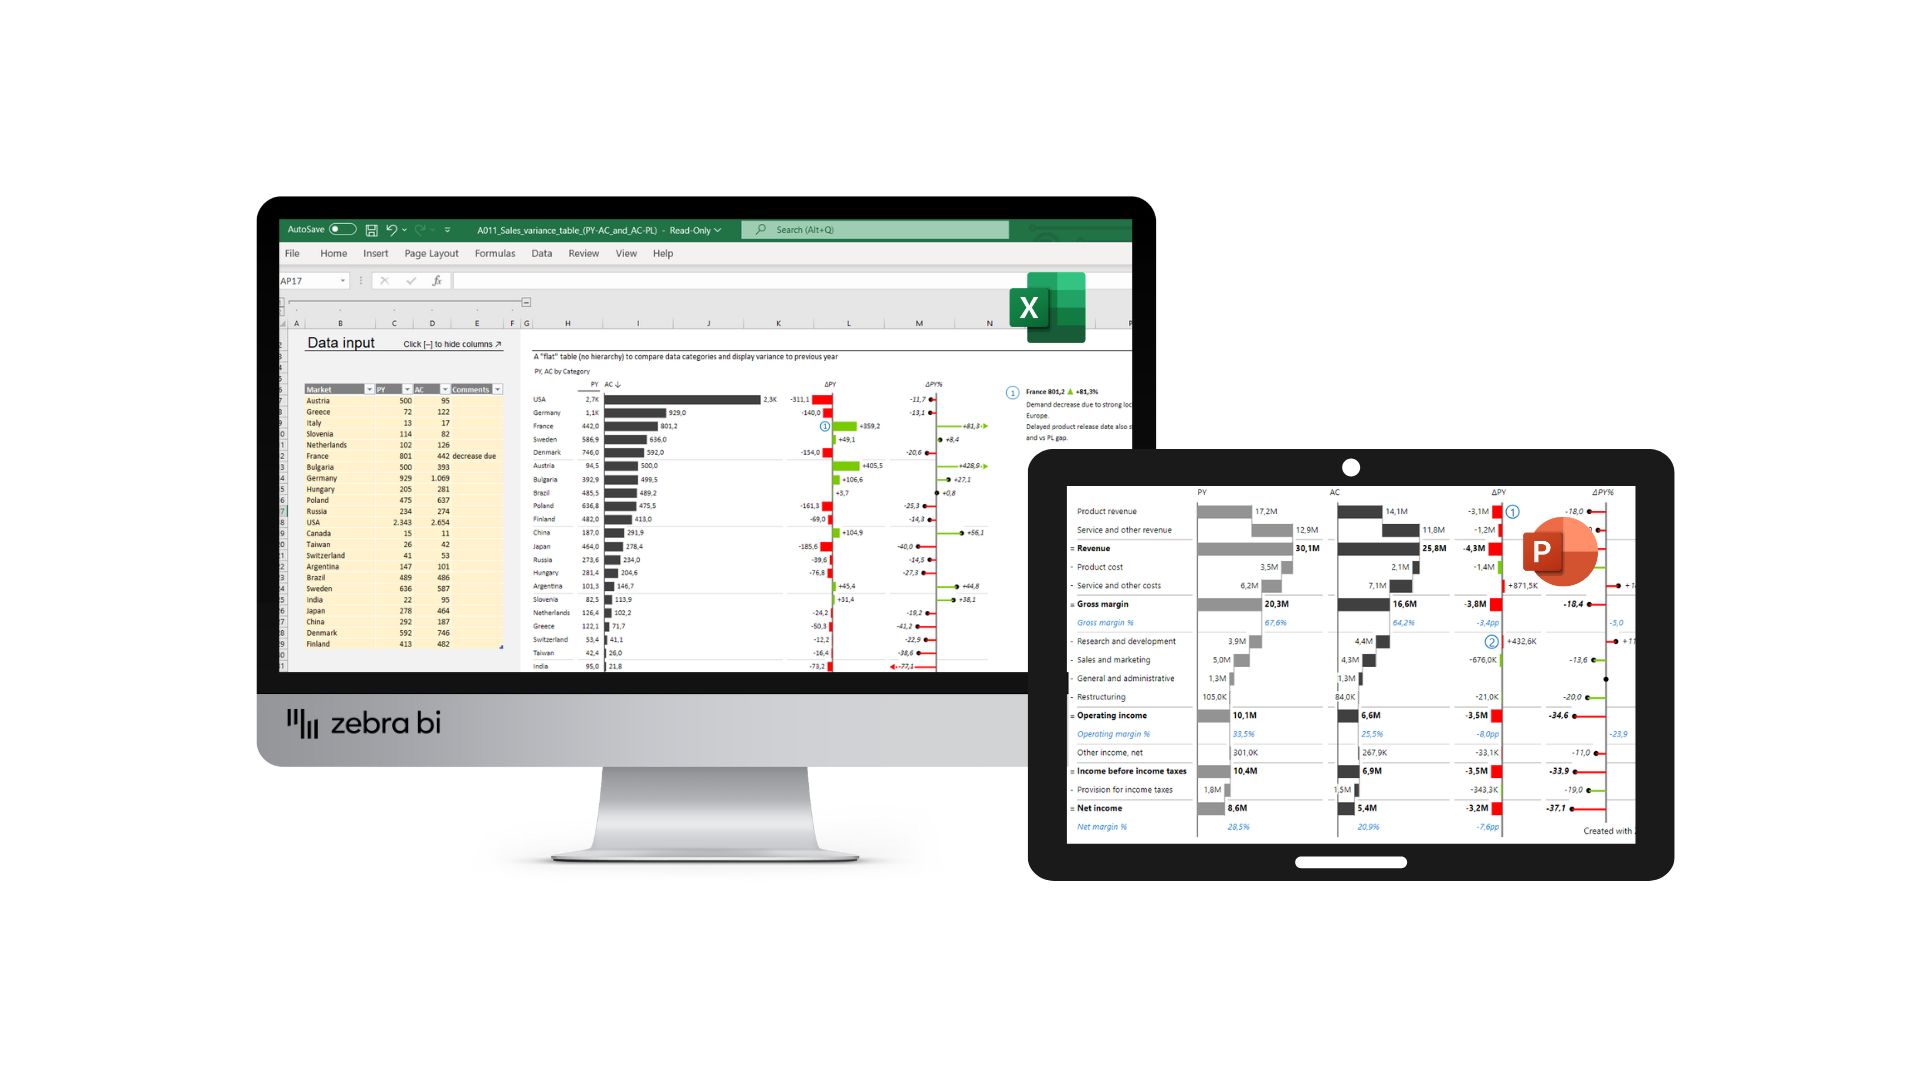 Zebra BI Office: Los visuals de Zebra BI ahora en Excel y Powerpoint